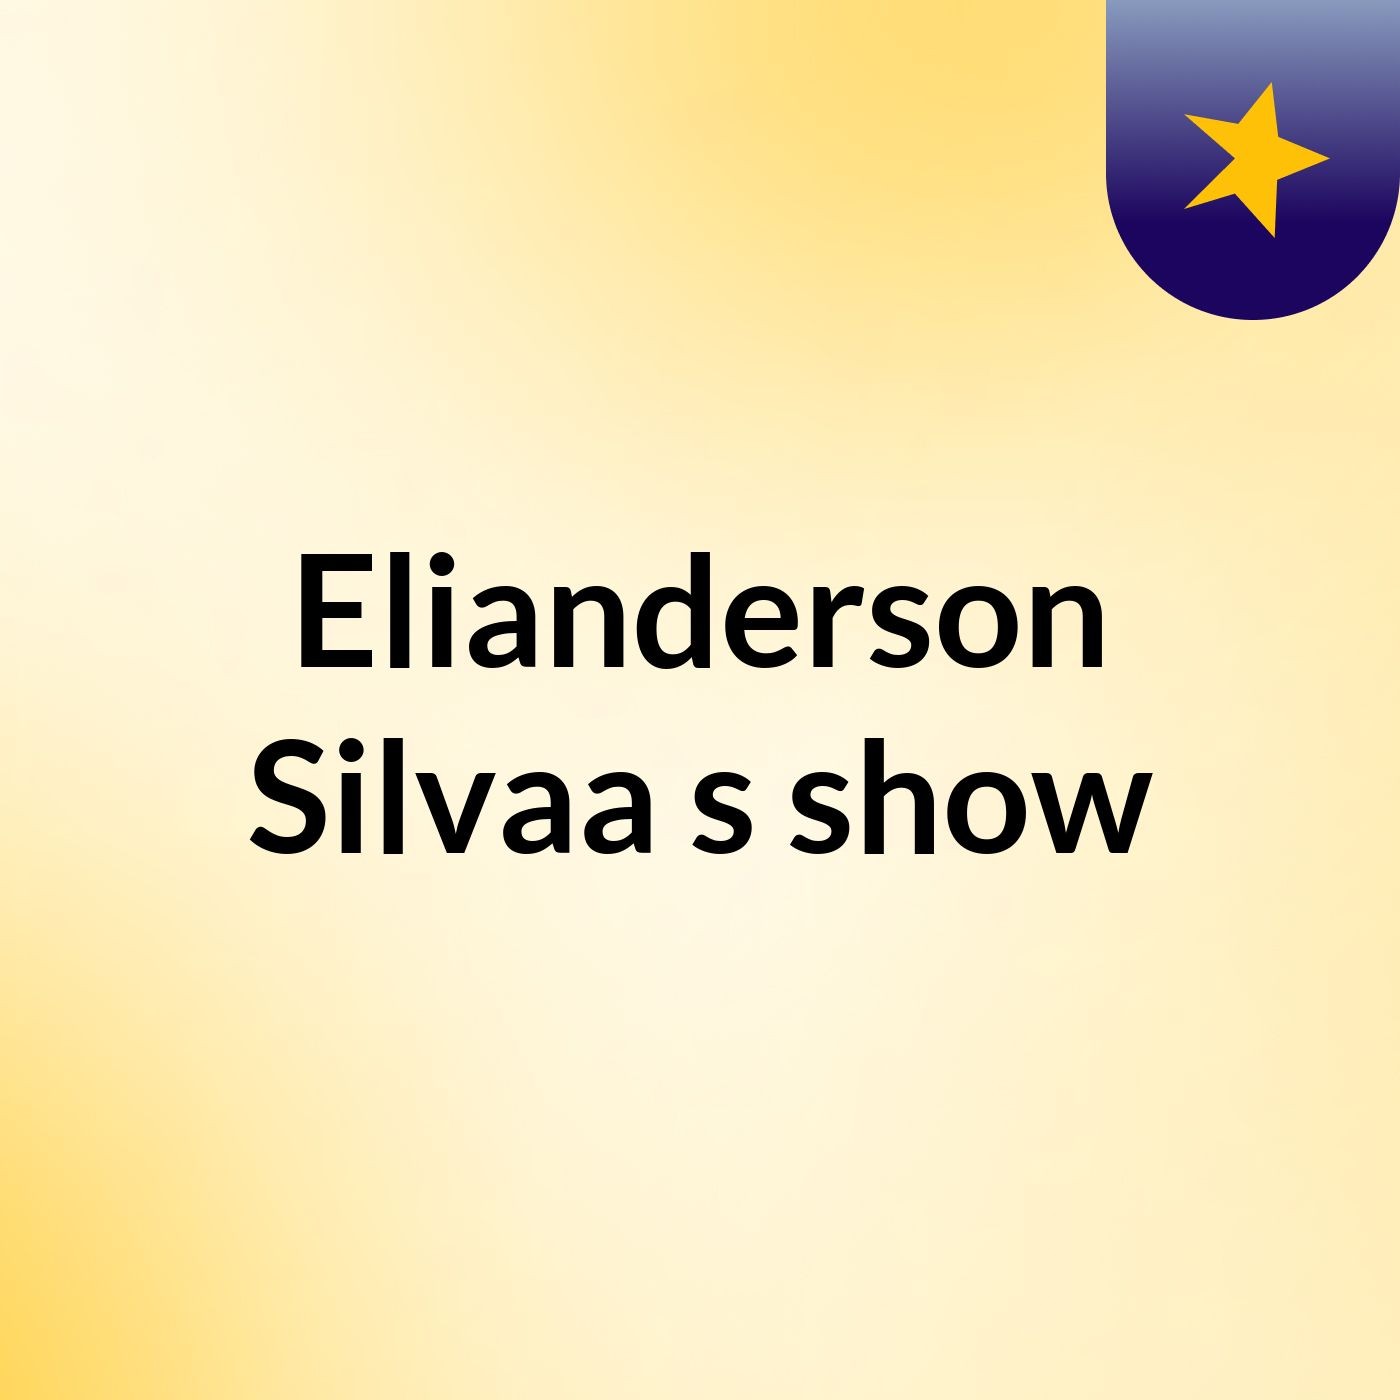 Elianderson Silvaa's show